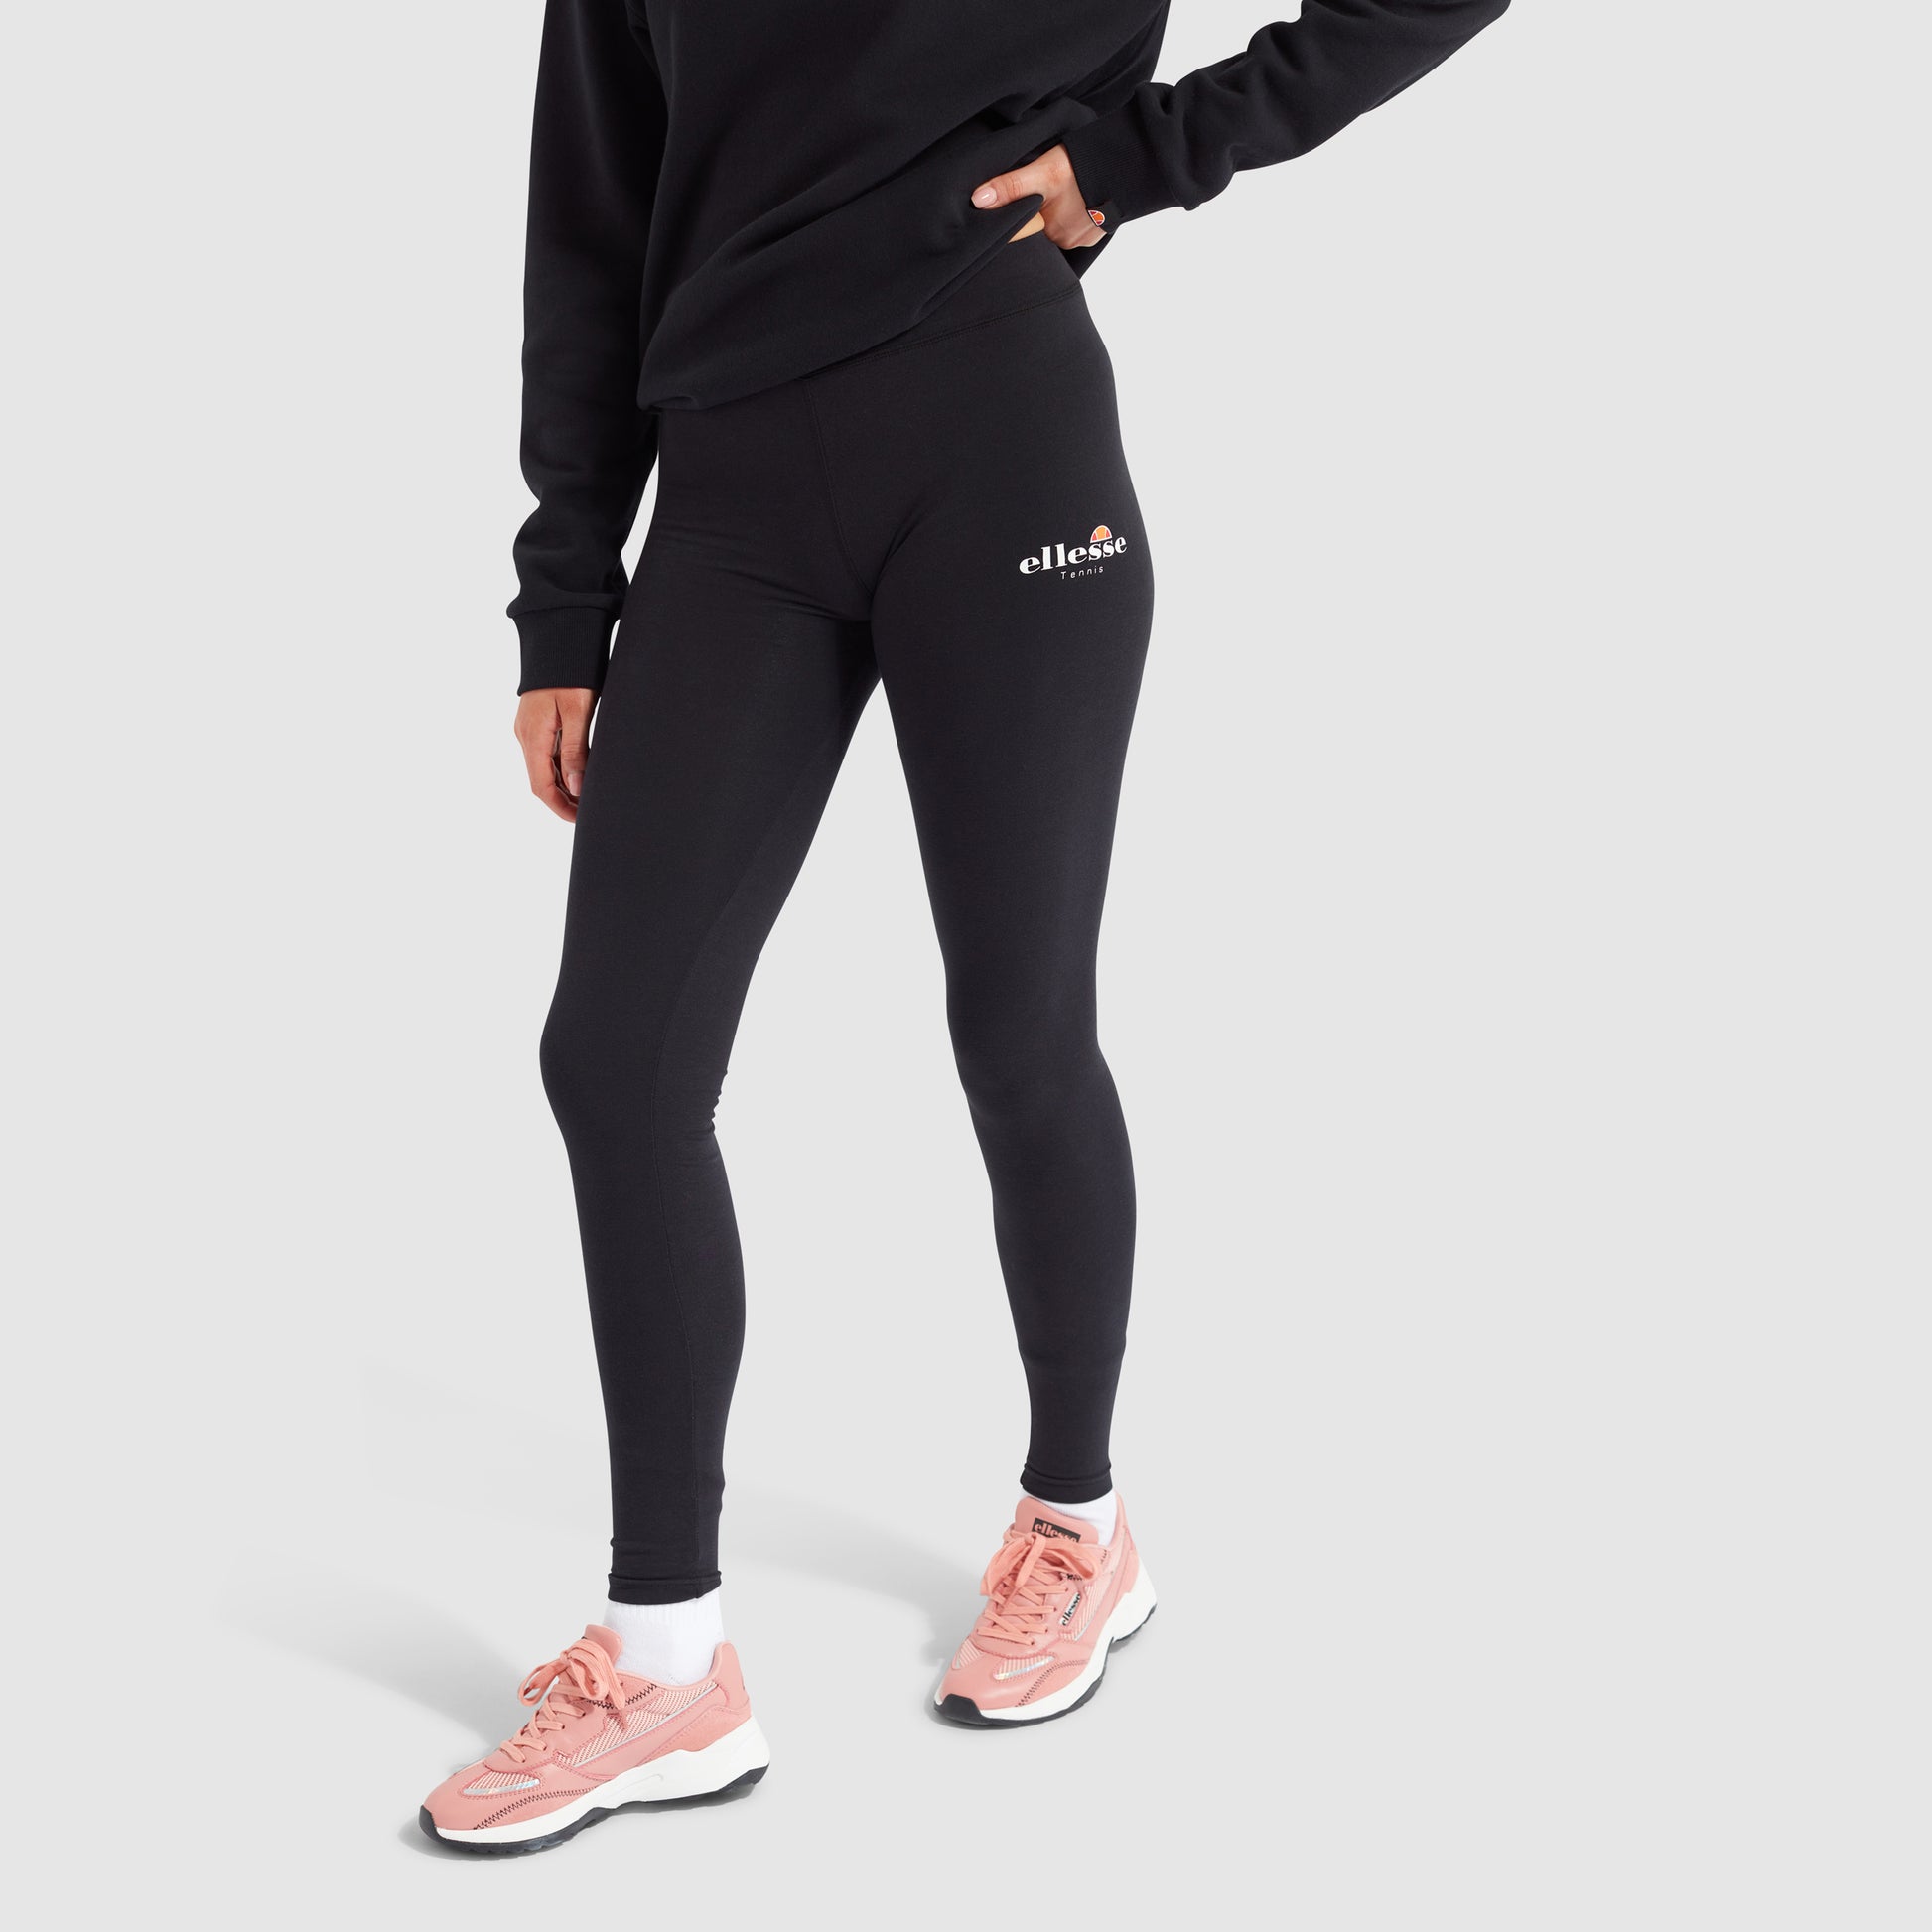 ellesse Tennis Women's Legging – NewCo Brands